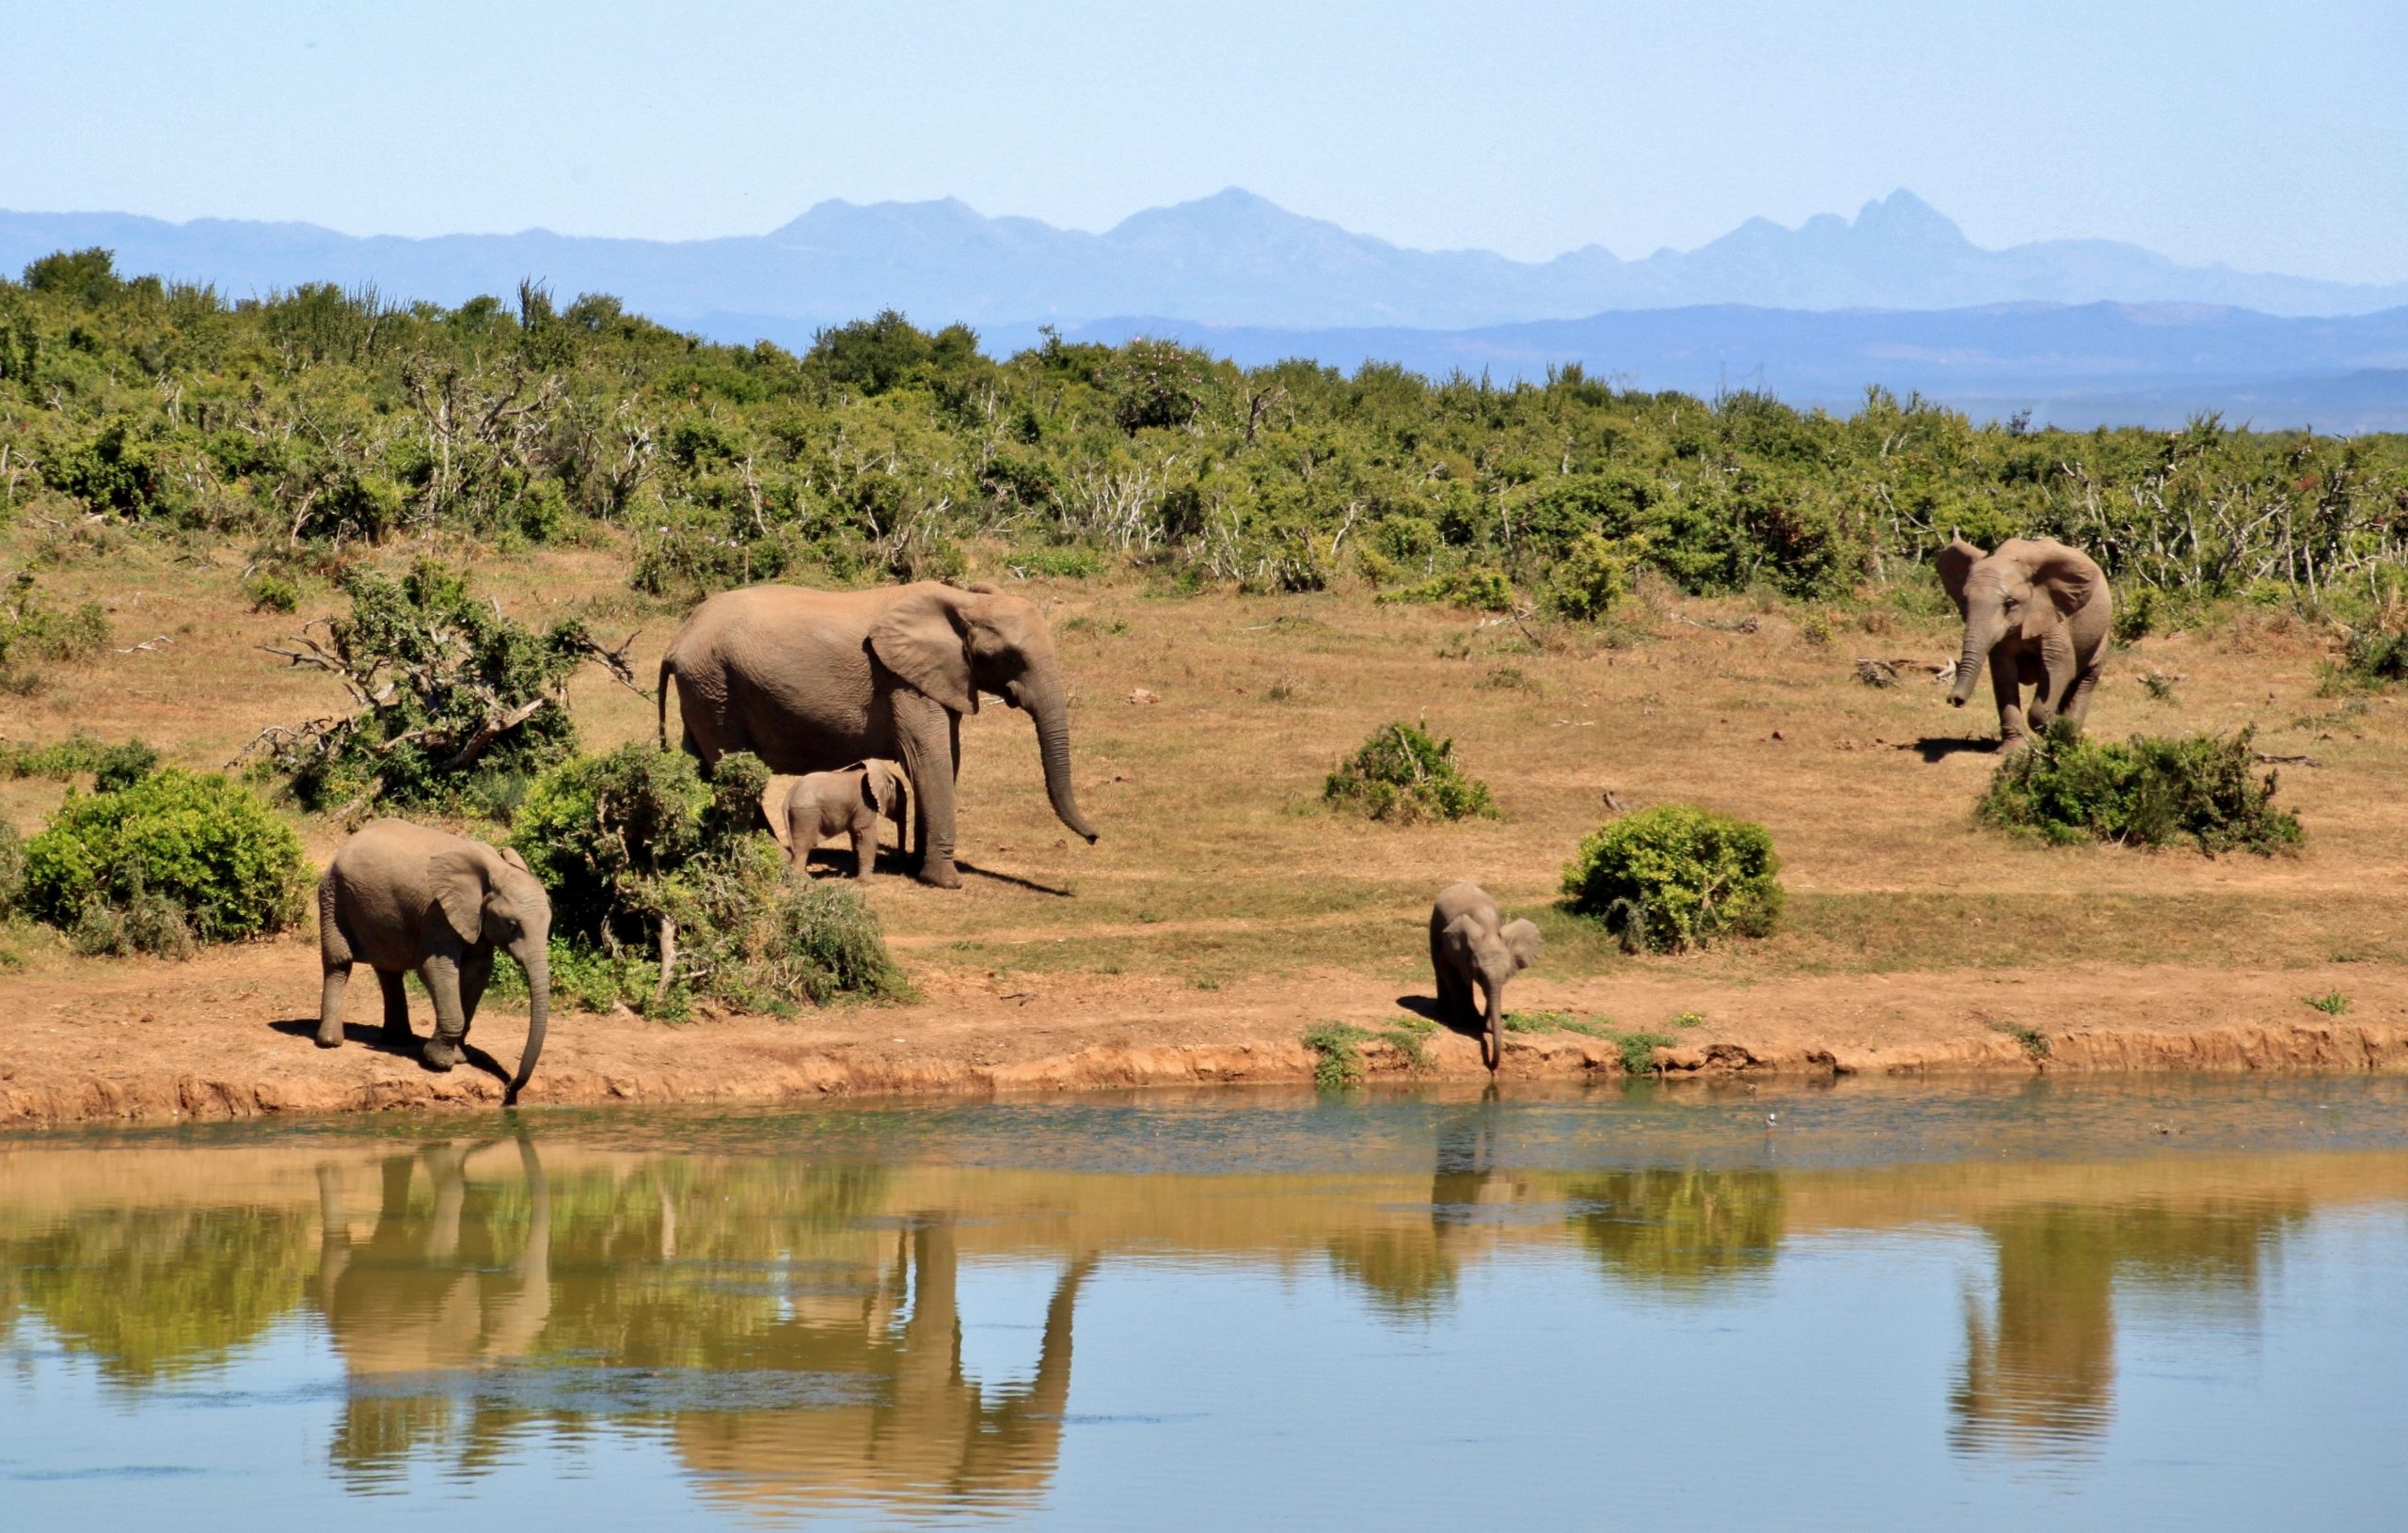 Wildlife tourism has a sustainable future